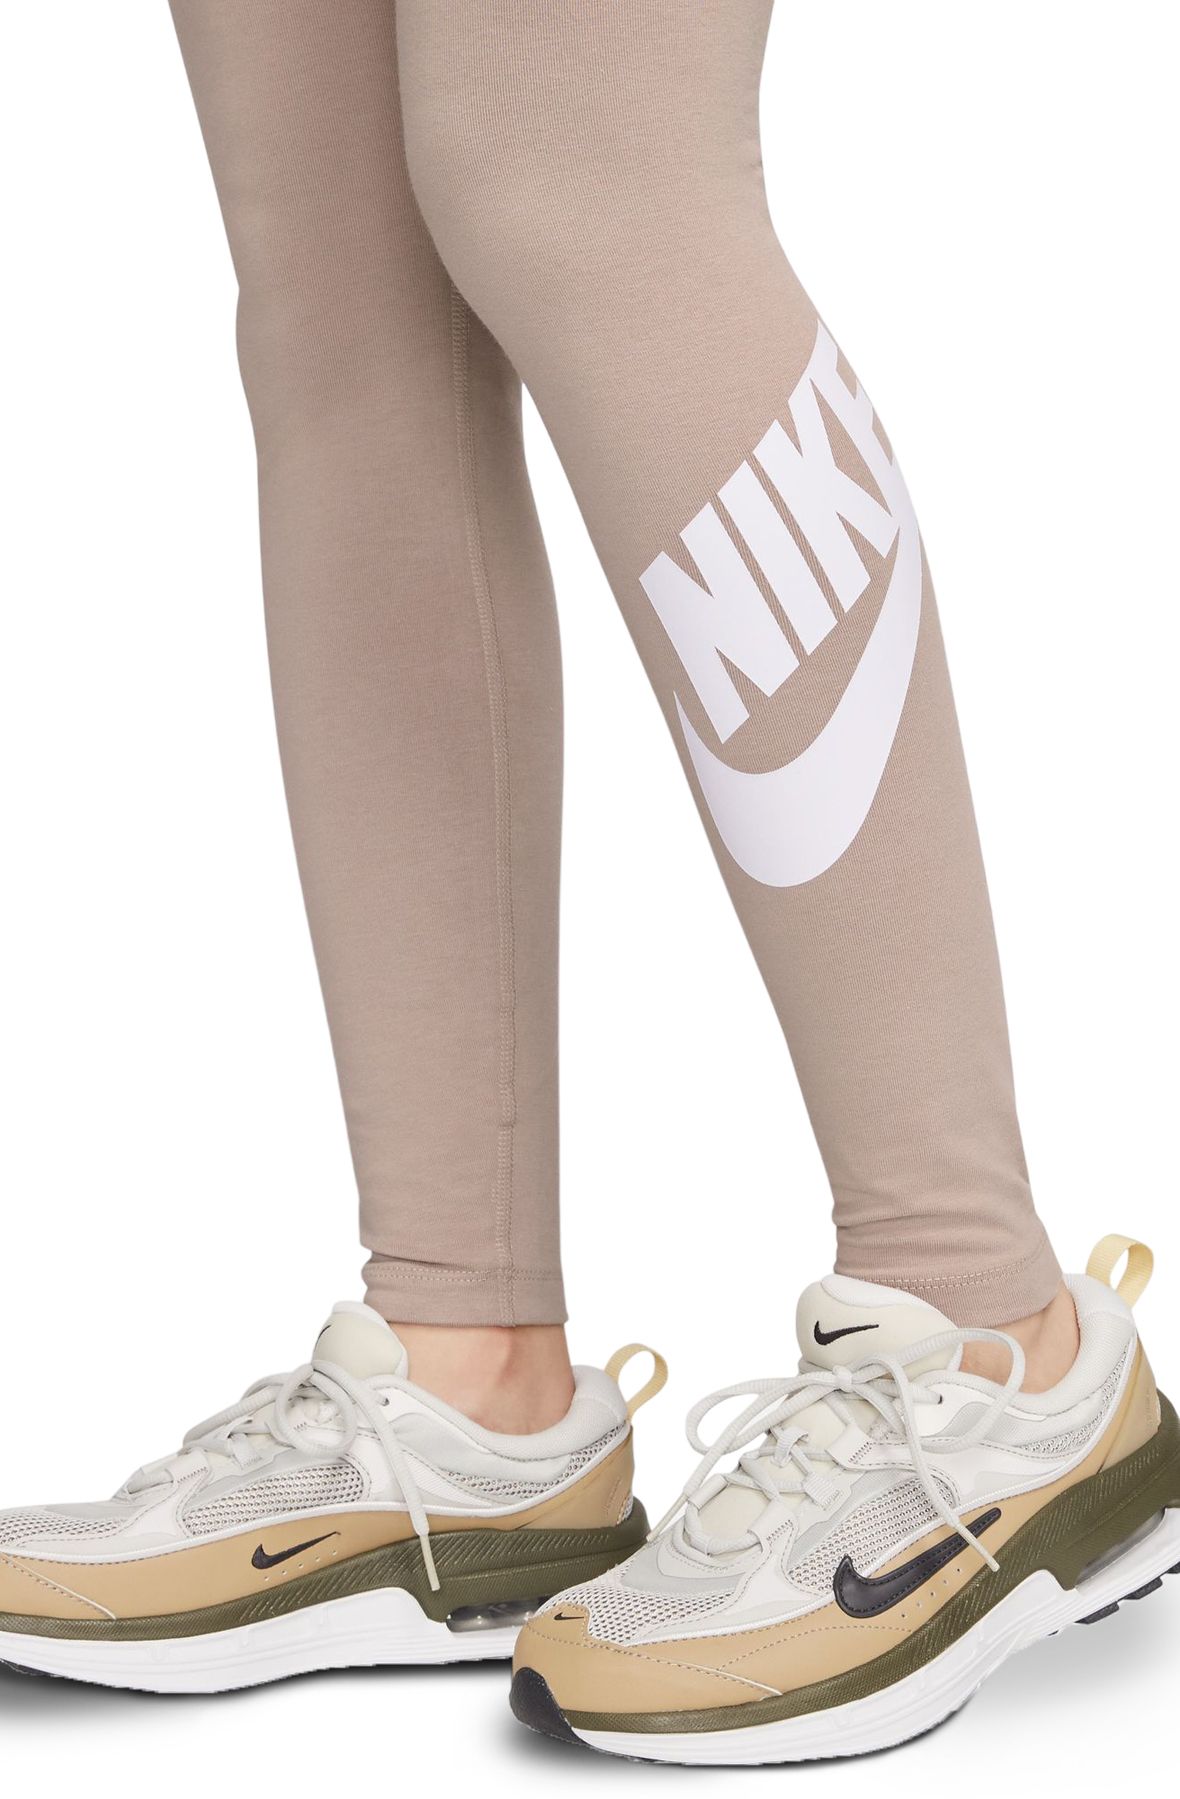 Nike Sportswear Women's Sport Shine Leggings (Rattan/White) – Centre